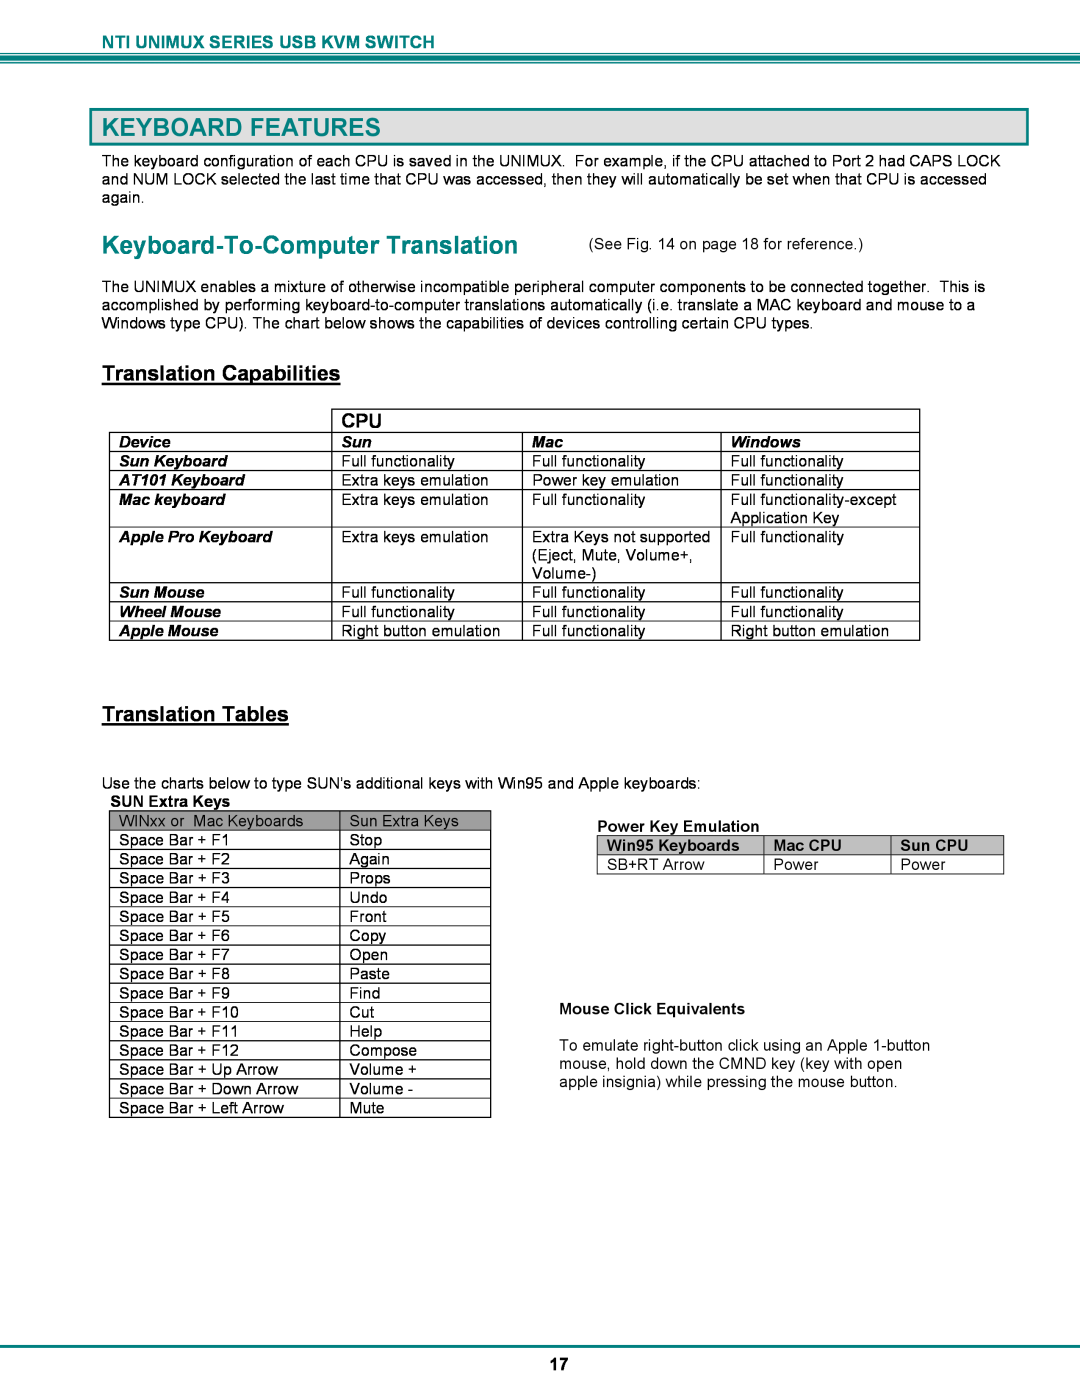 Network Technologies USB DVI KVM Keyboard Features, Keyboard-To-Computer Translation, Translation Capabilities 